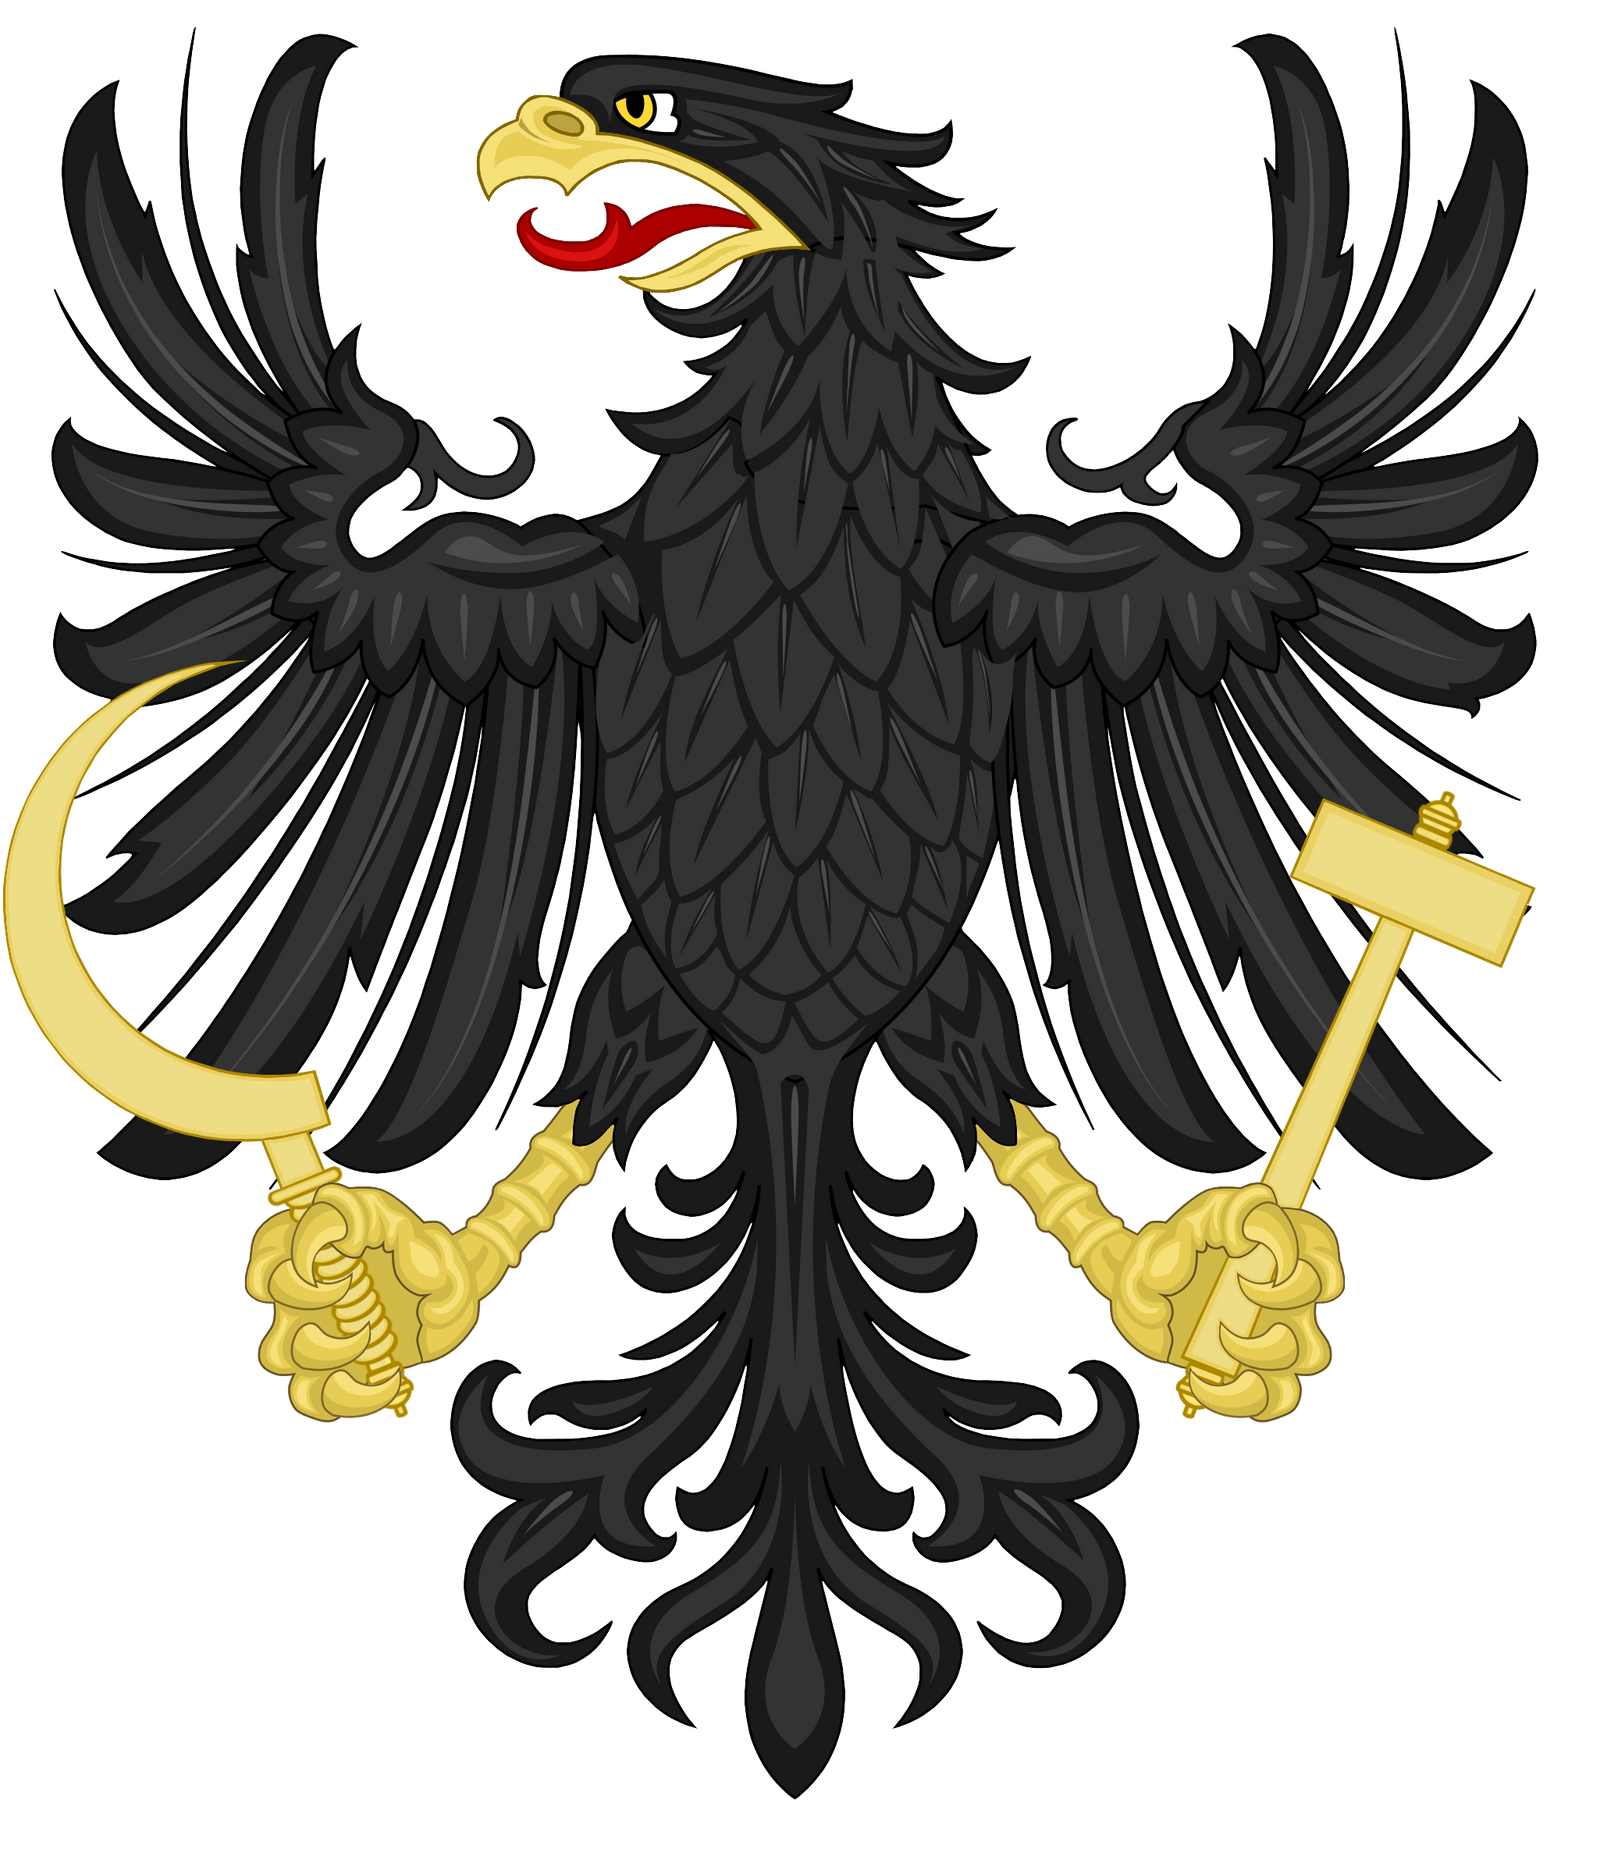 CoA People's Republic of Prussia by TiltschMaster on DeviantArt